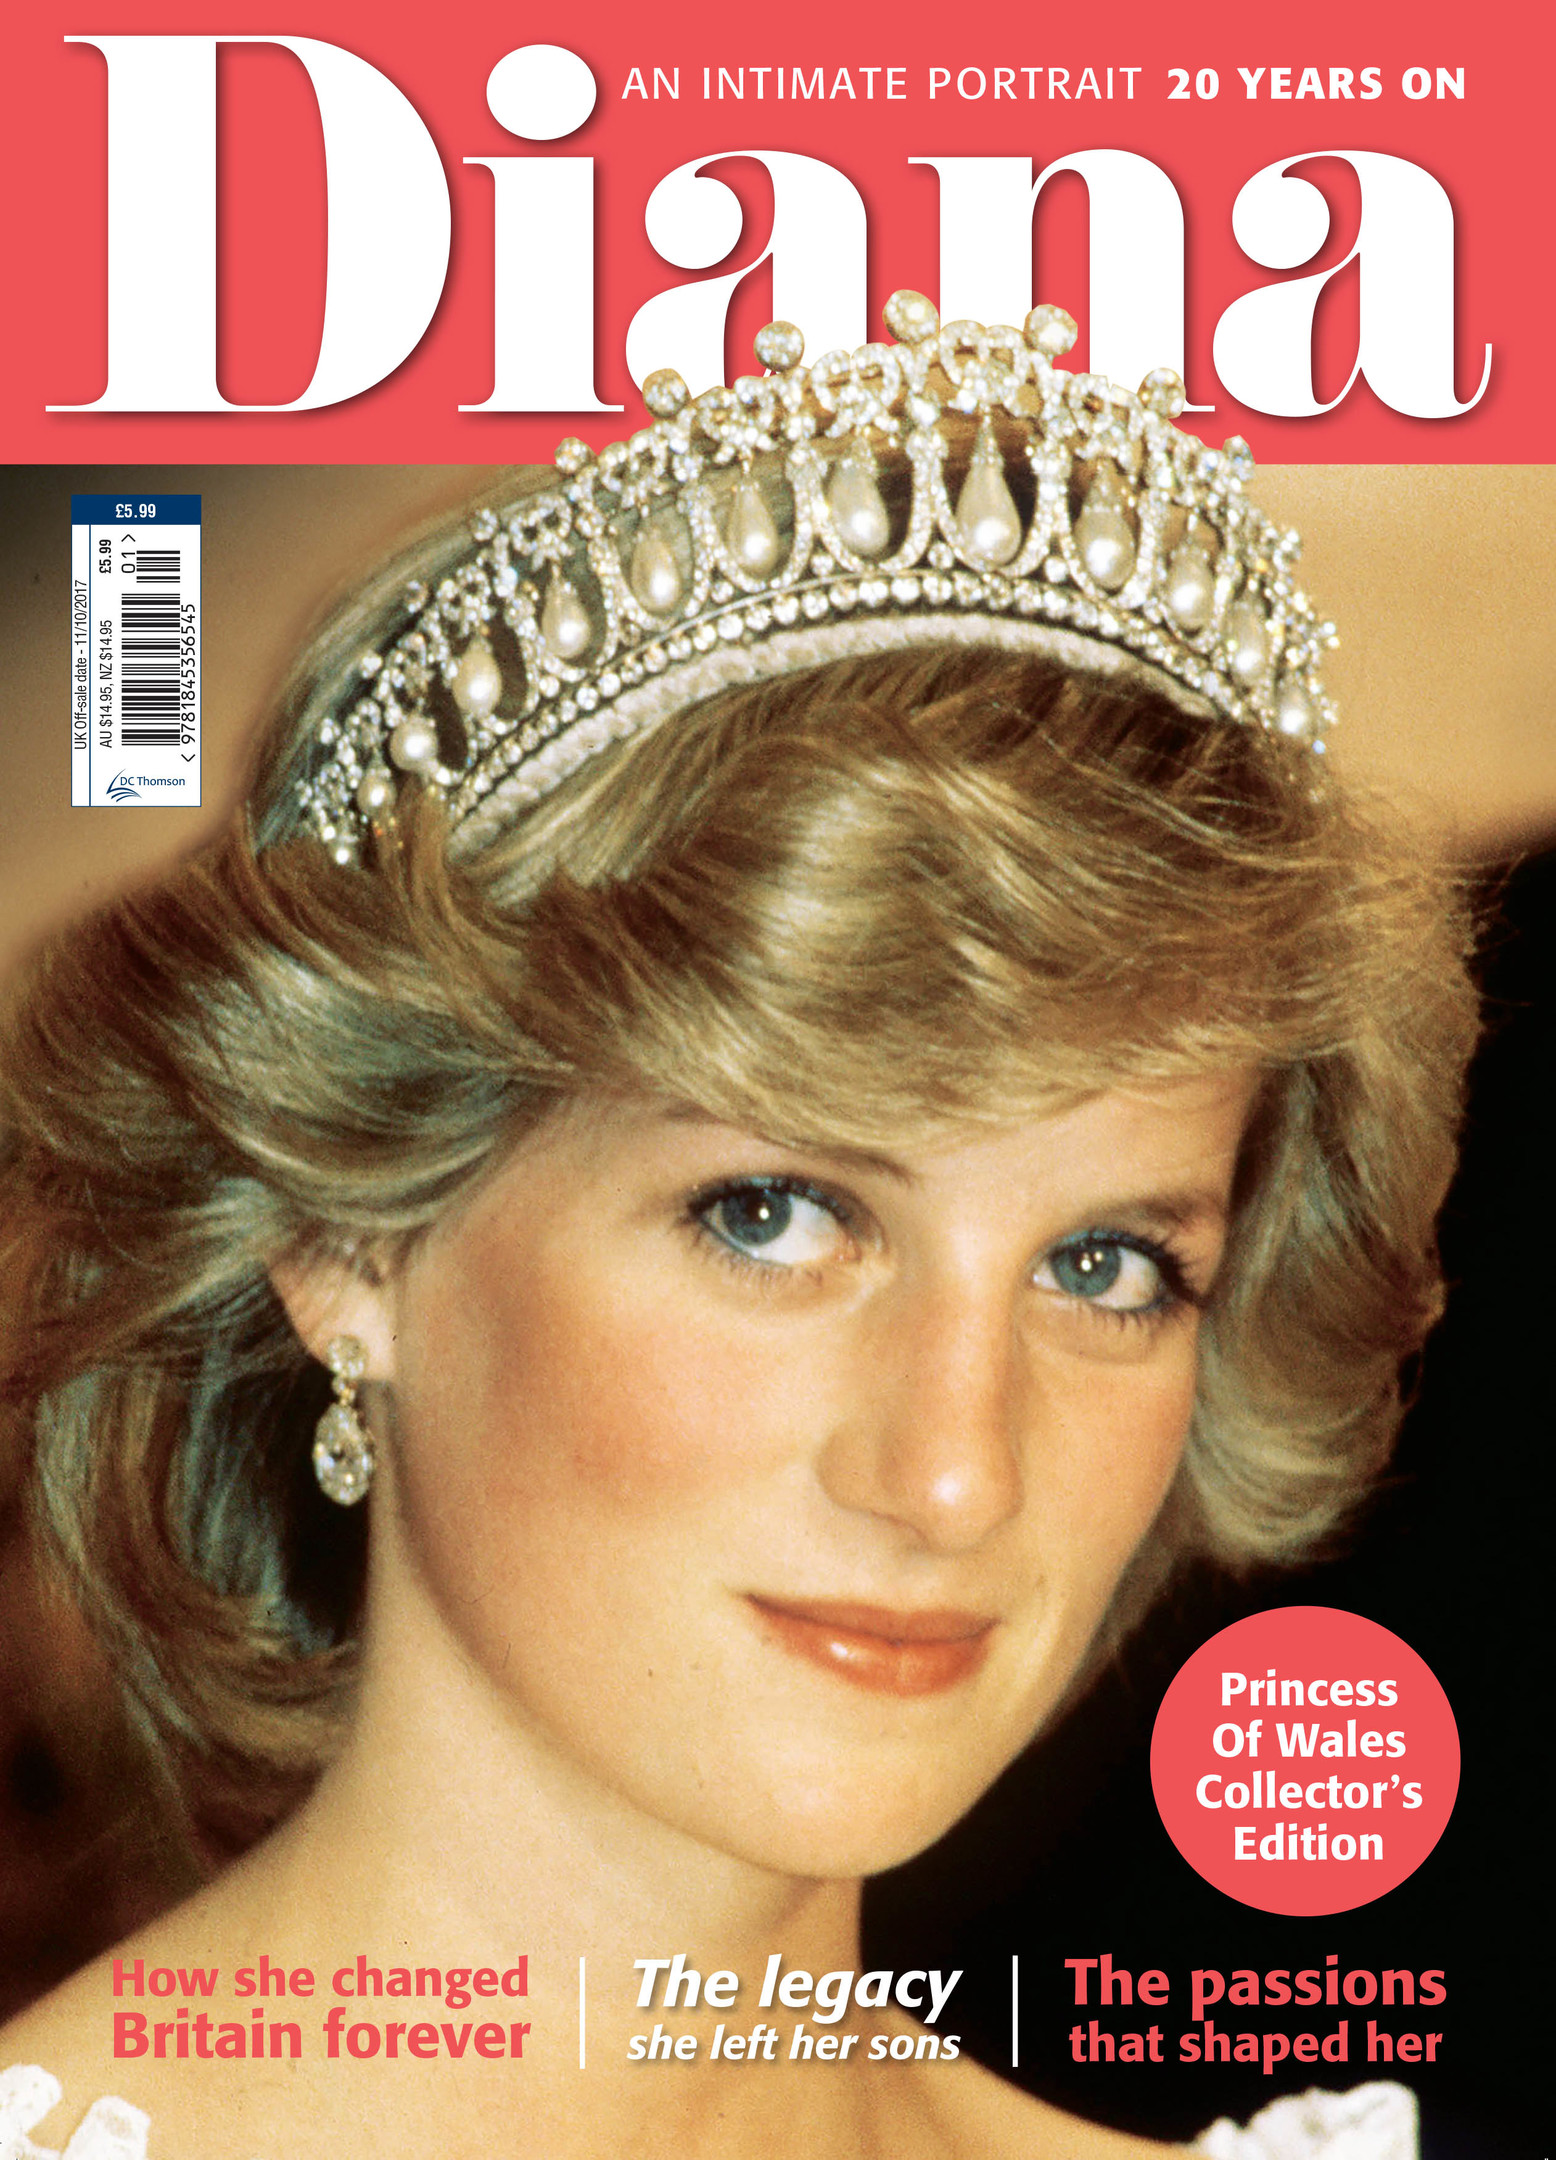 biography of late princess diana